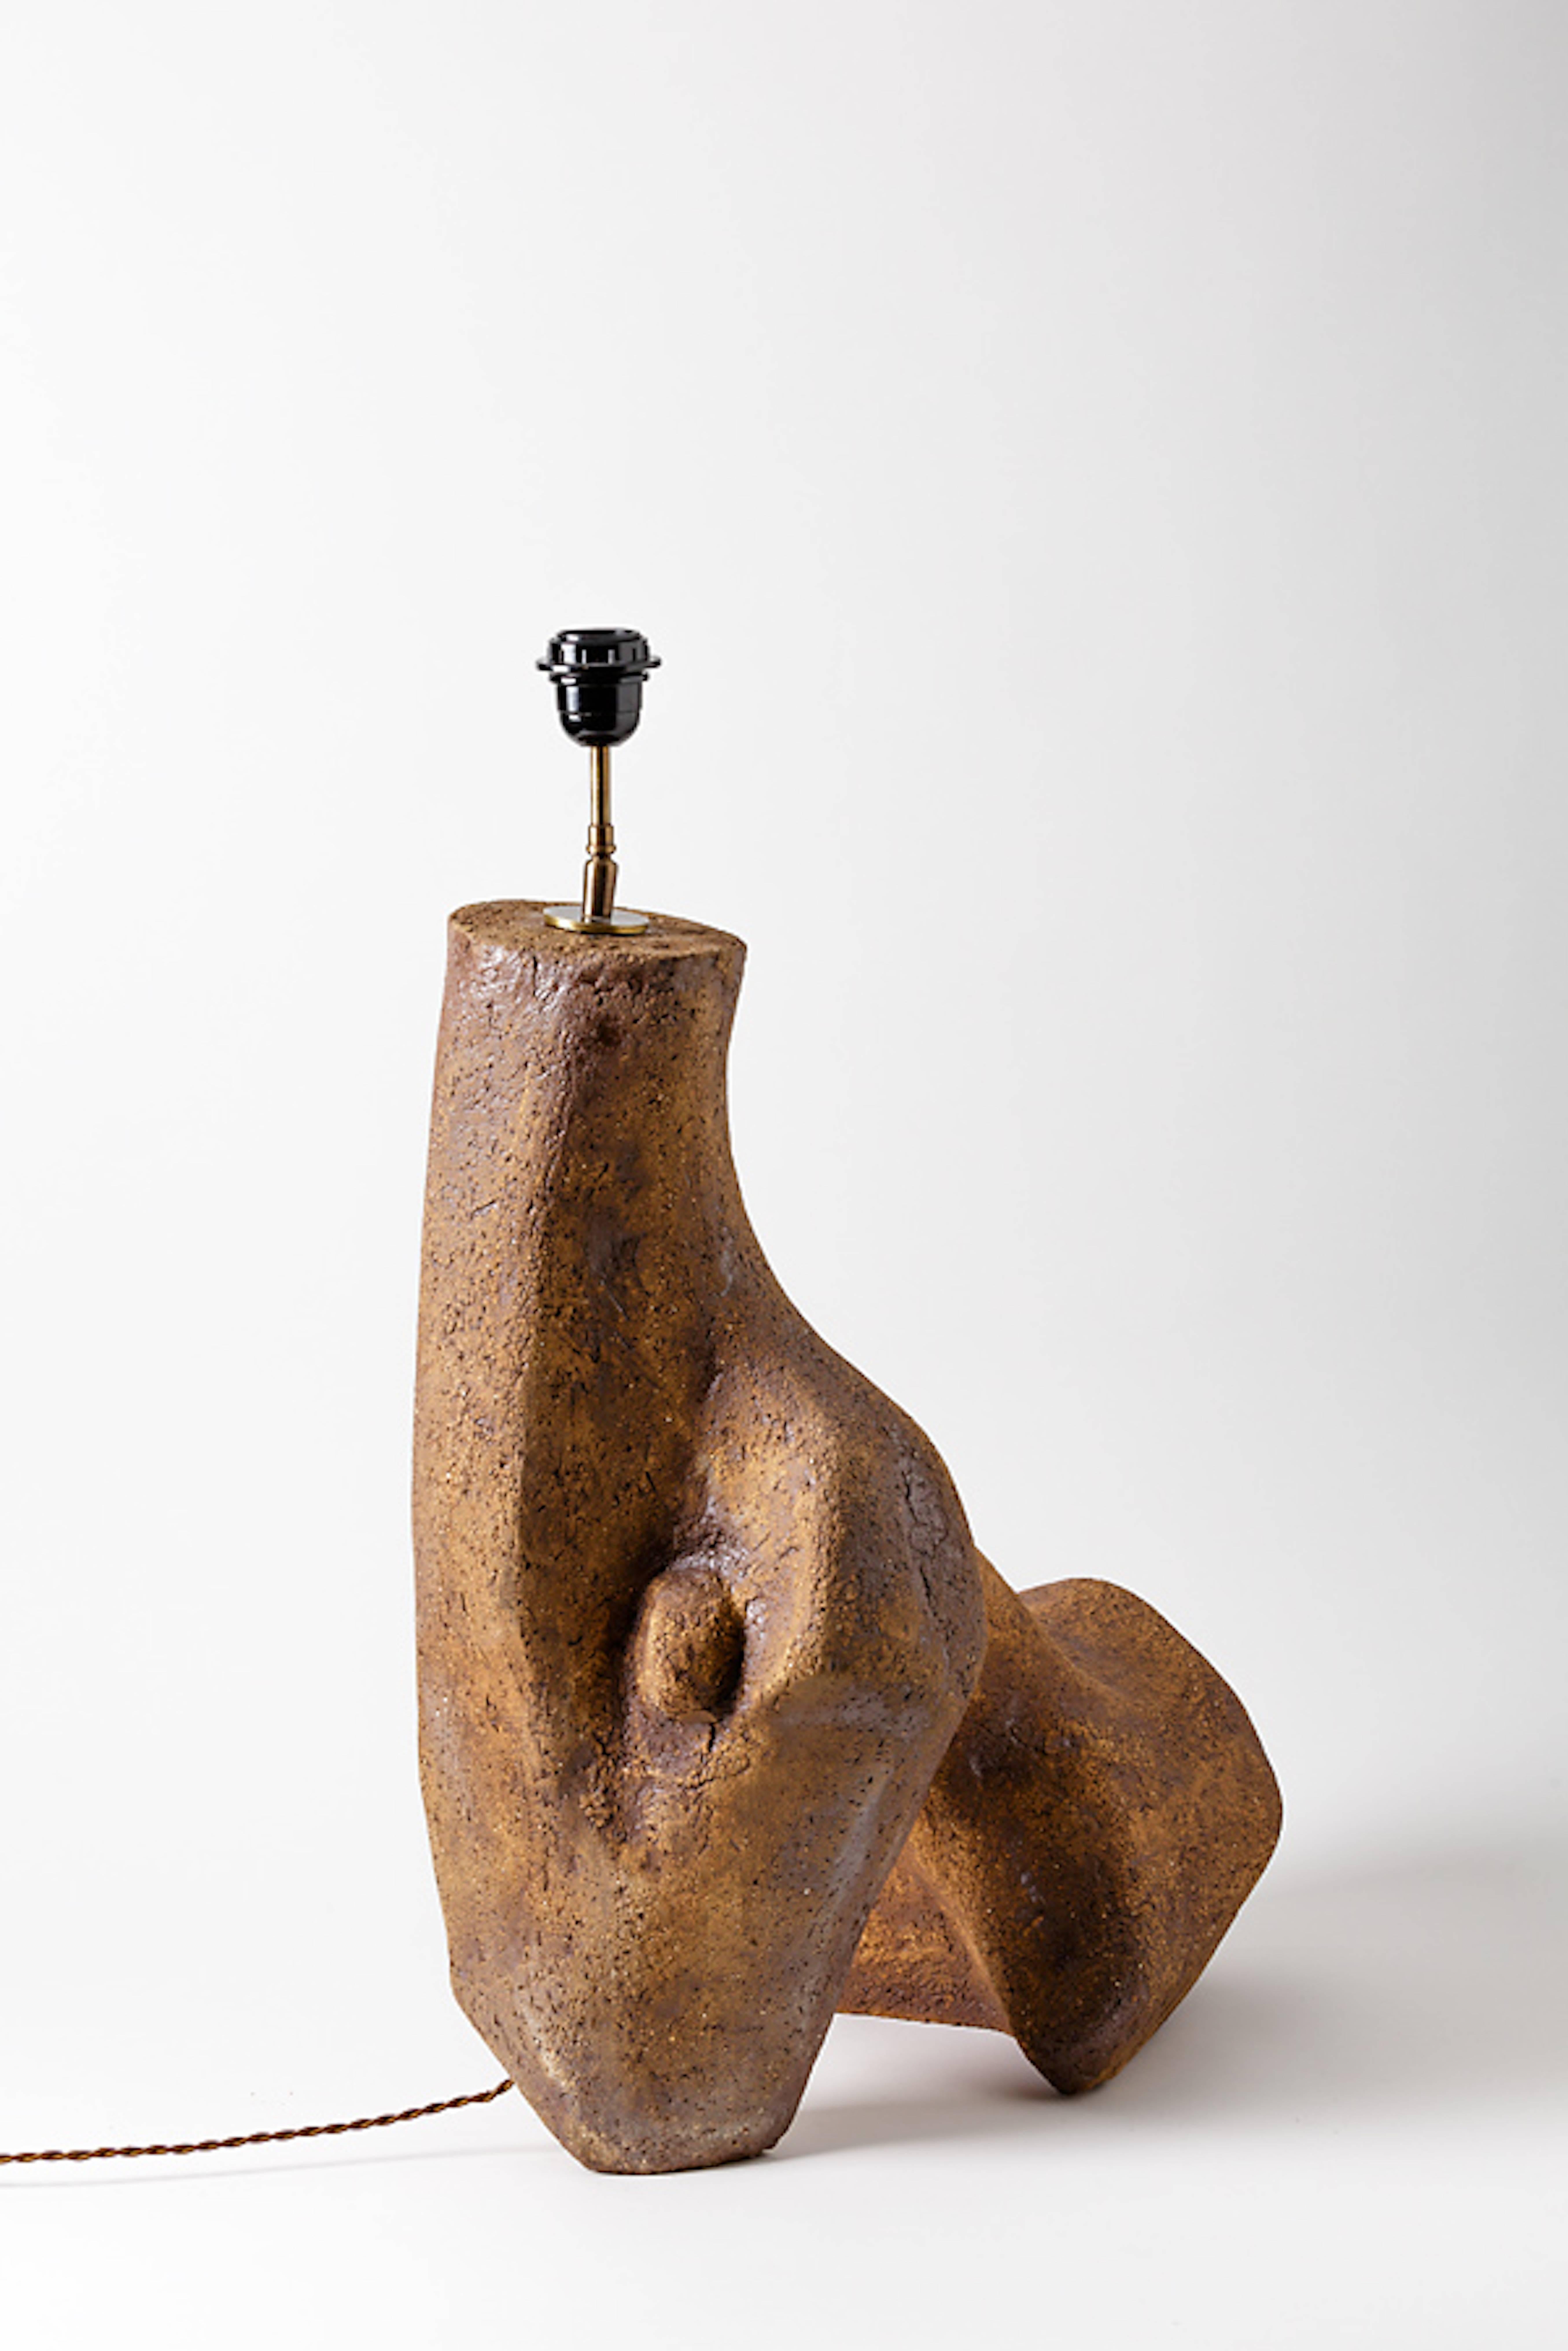 20th Century Ceramic Lamp by Tim Orr, circa 1960-1970